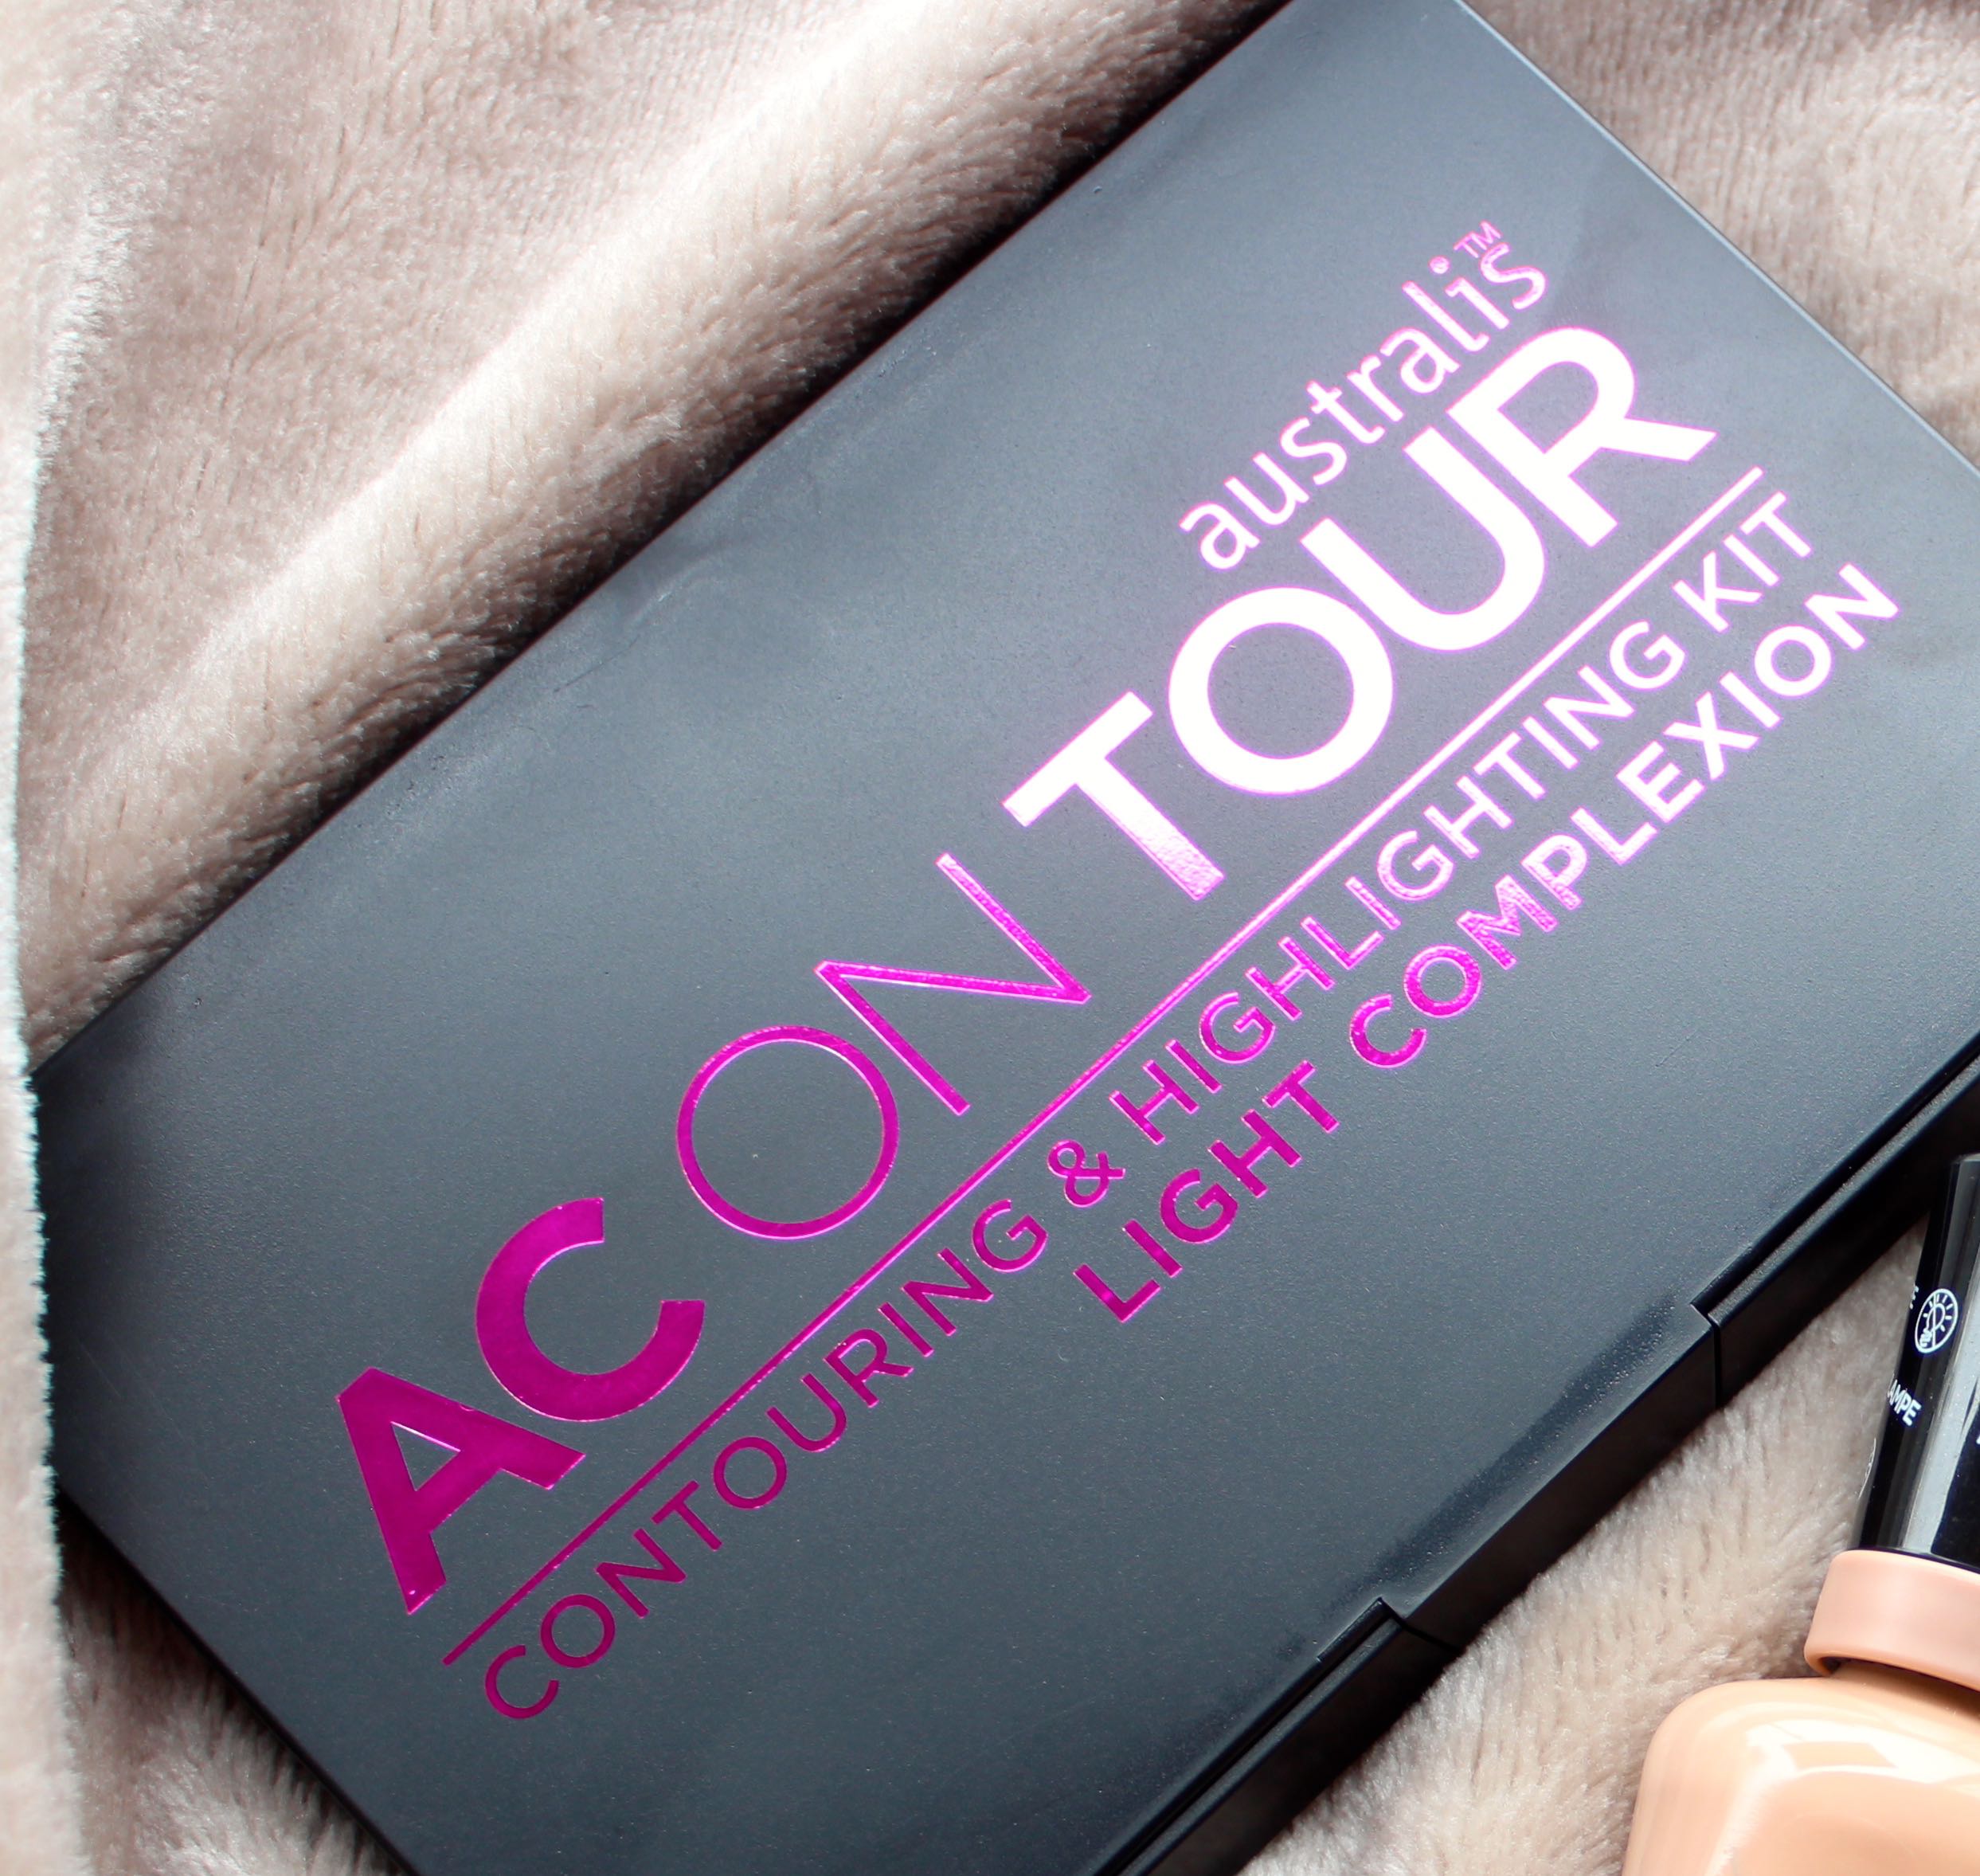 Review: Australis AC On Tour Contouring & Highlighting Kit 